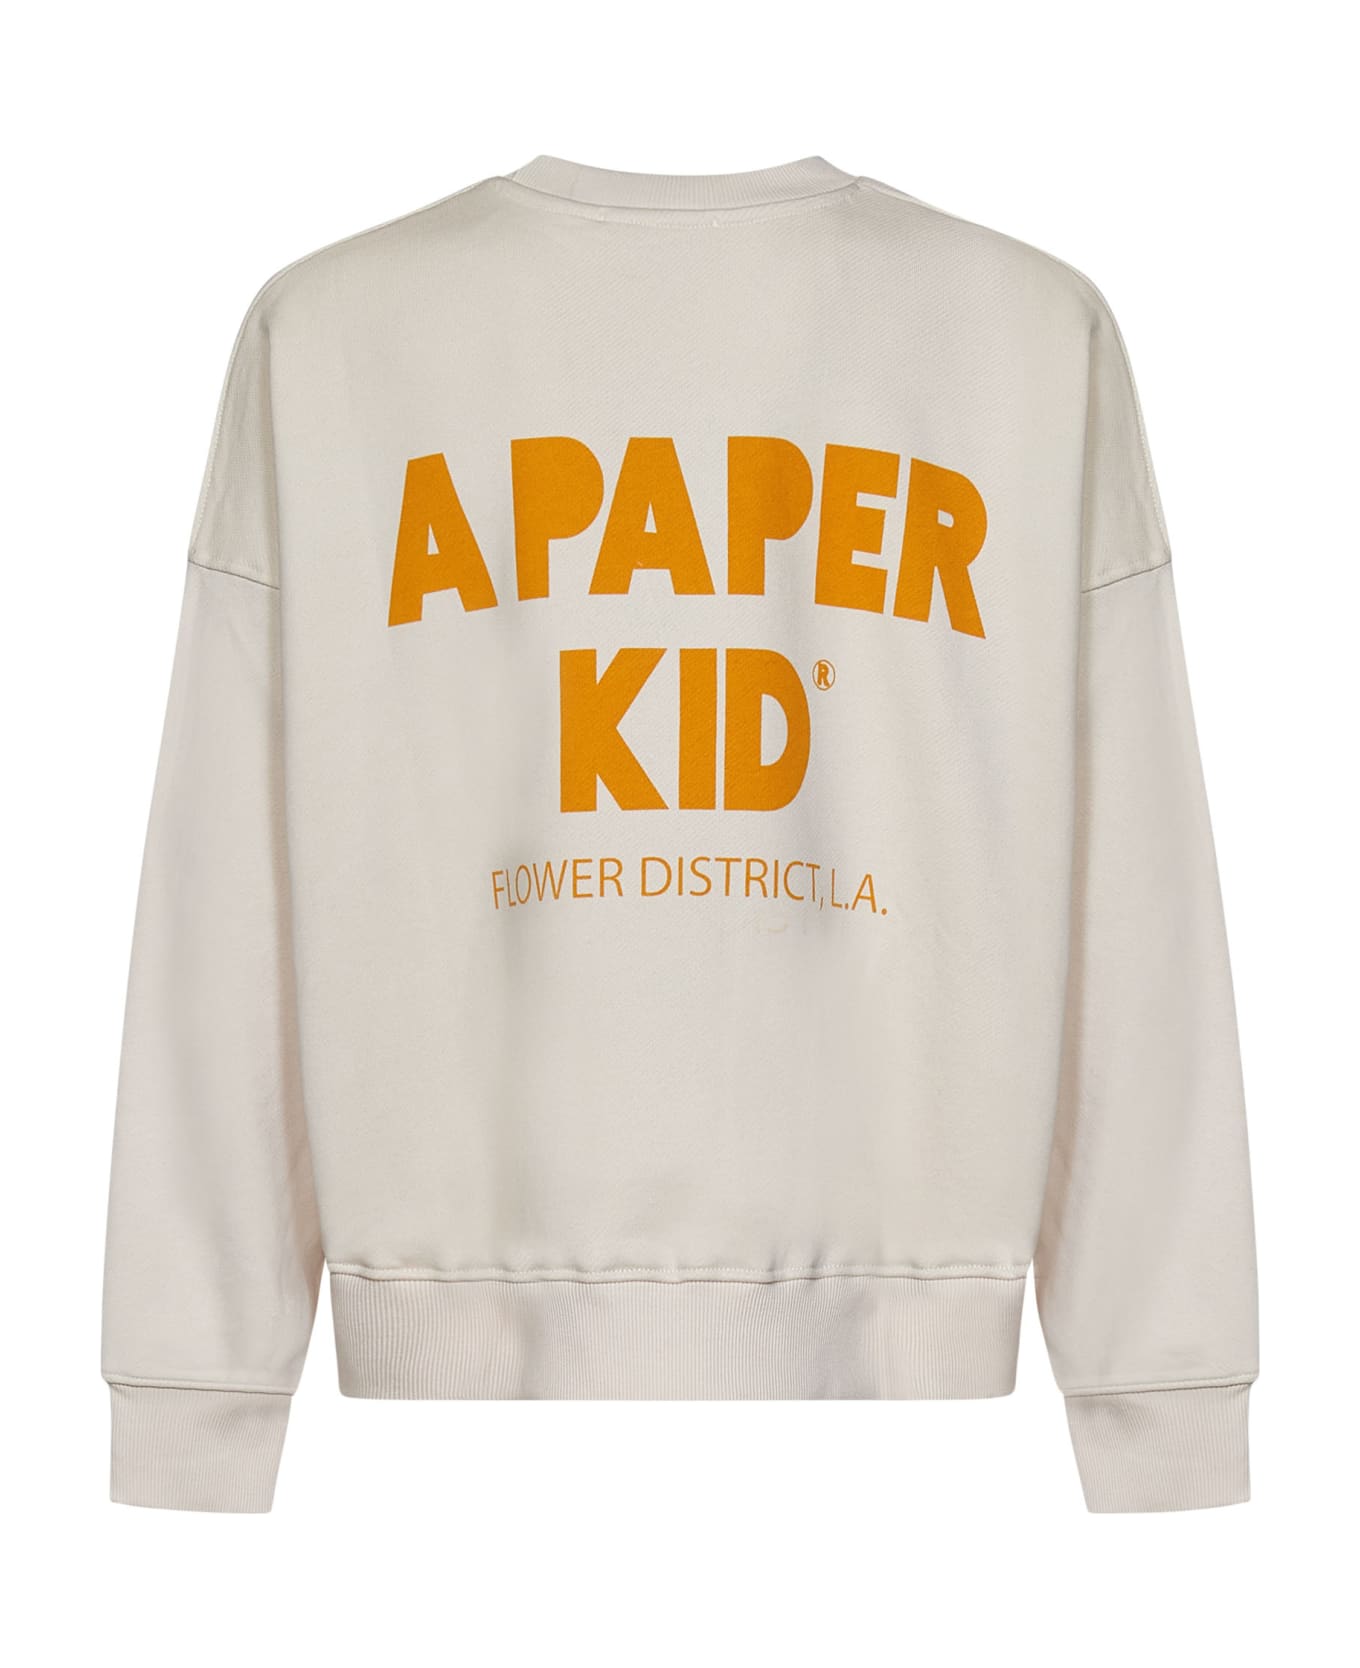 A Paper Kid Sweatshirt - Crema